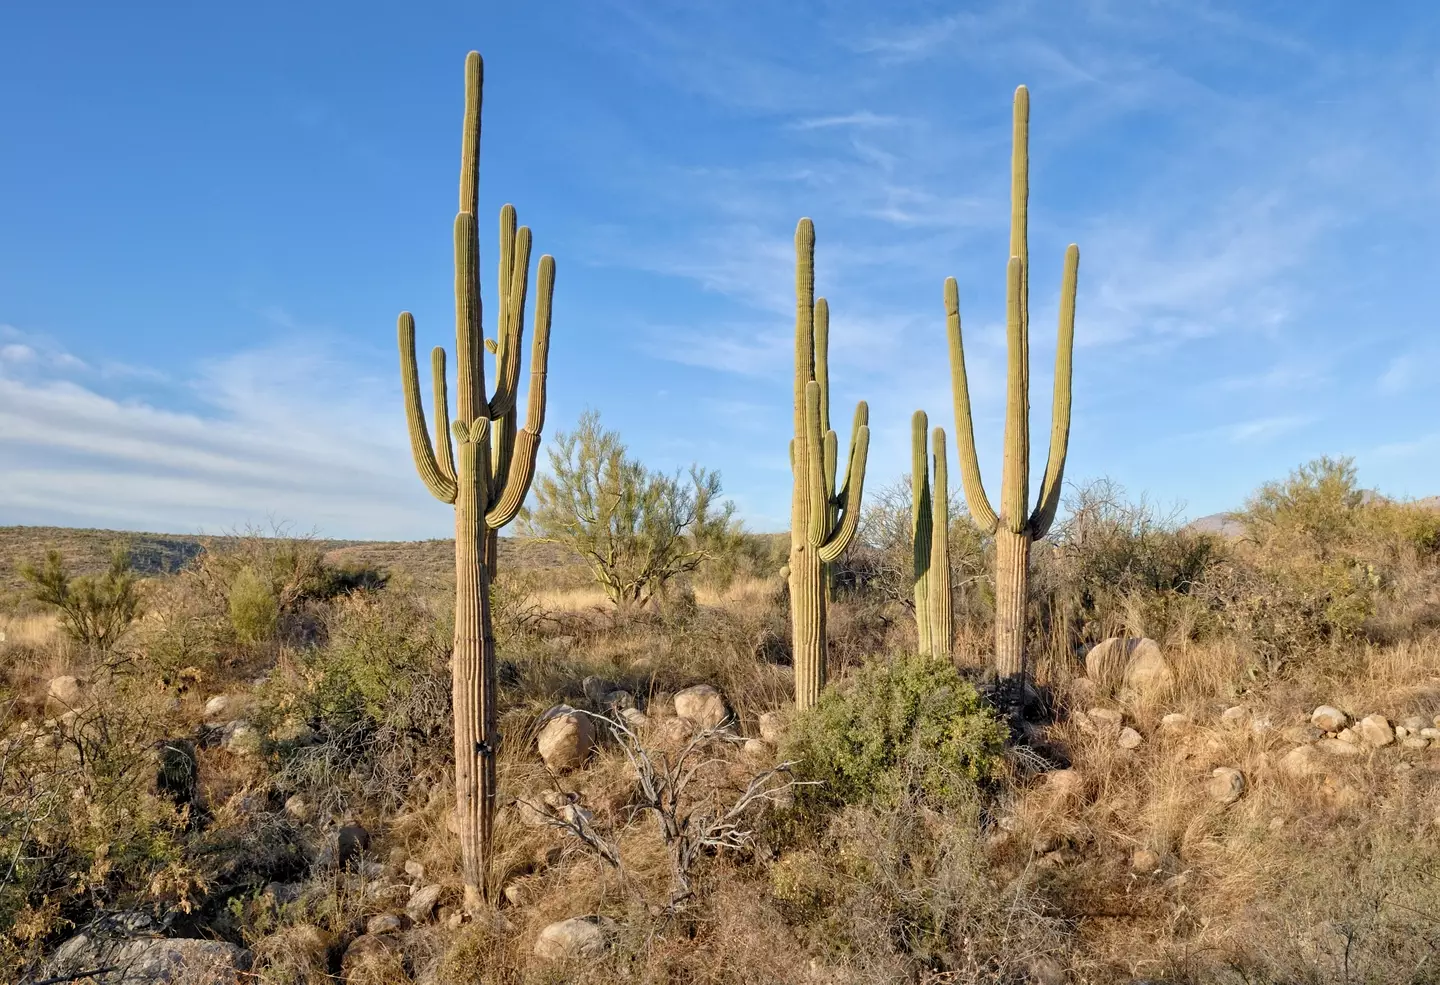 The saguaro cactus is an icon of Arizona.